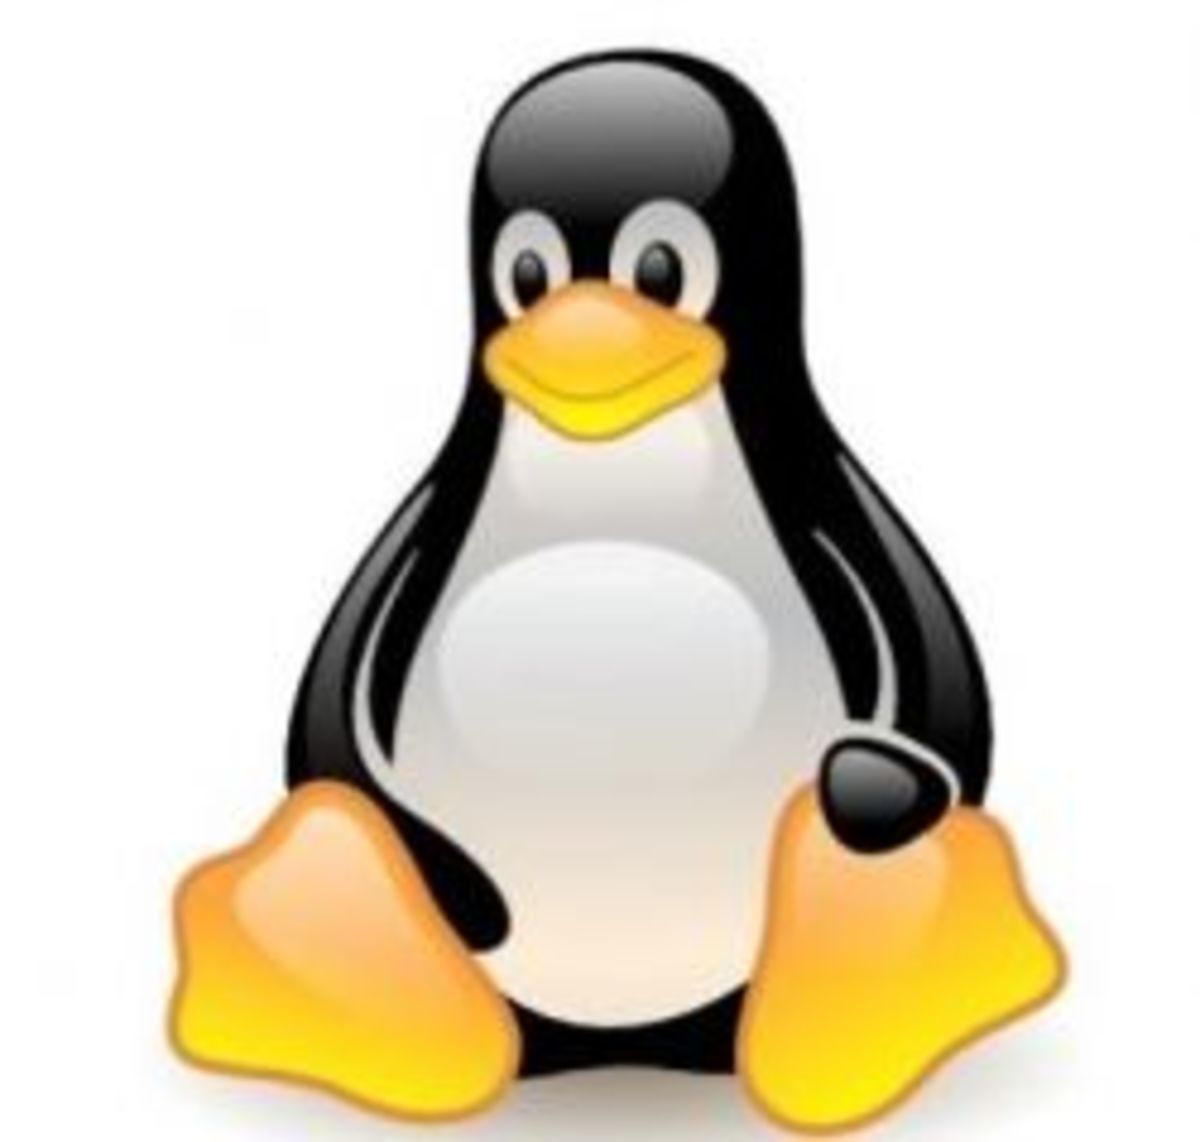 Puppy Linux alternative Linux operating system